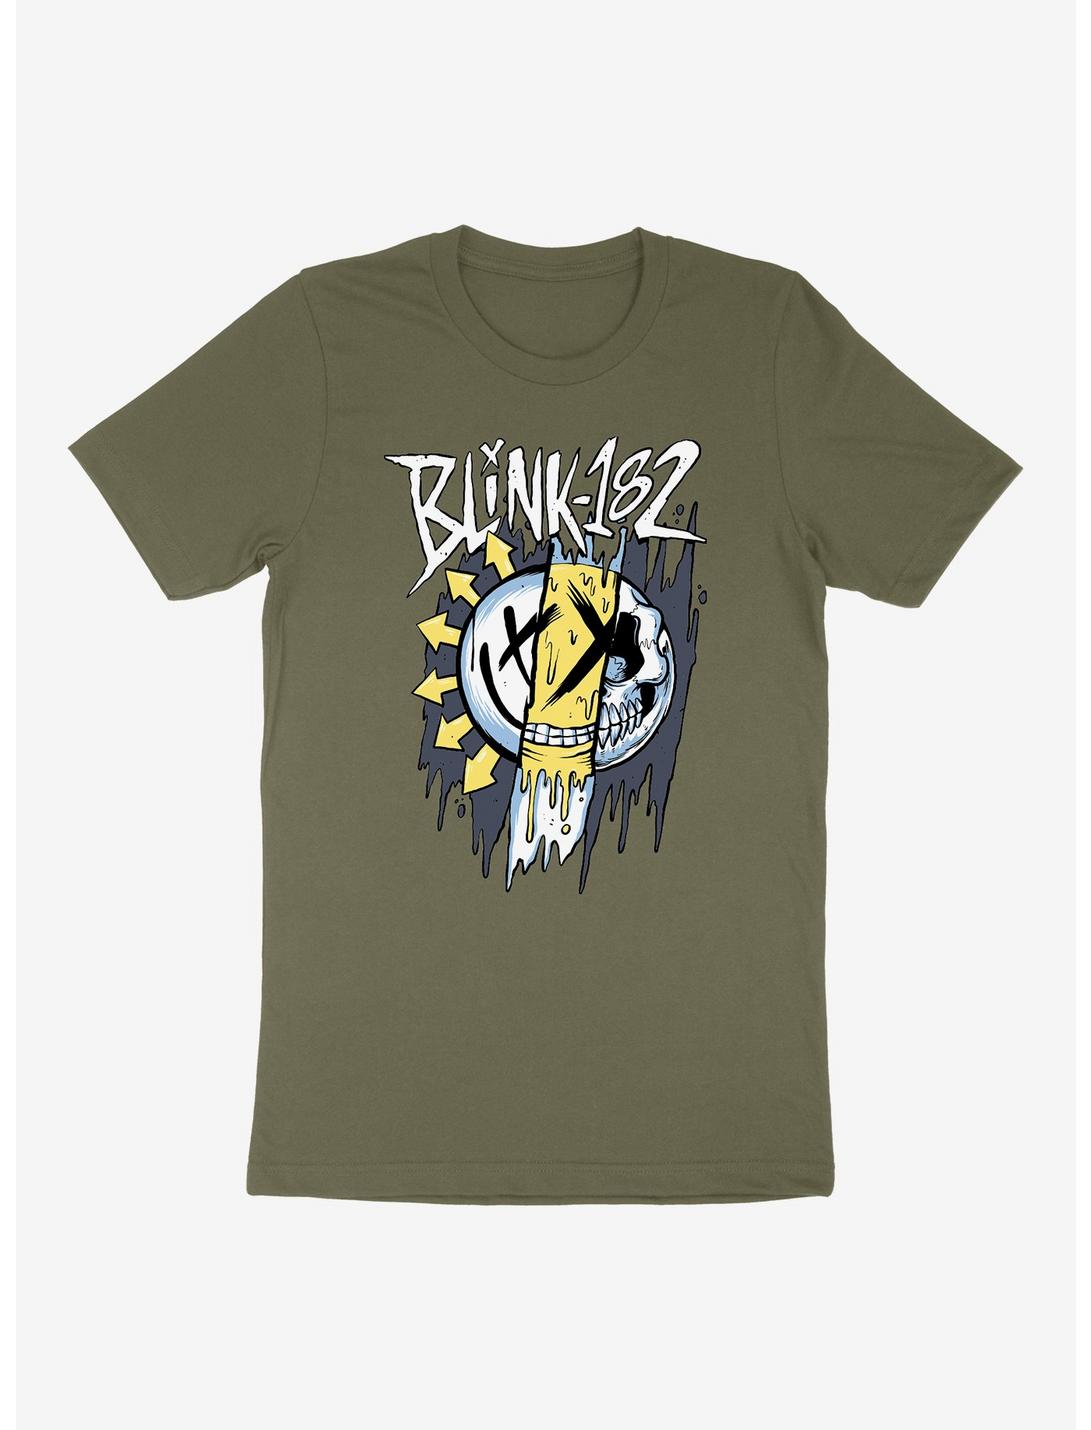 Blink-182 Mixed Up Logo Boyfriend Fit Girls T-Shirt, OLIVE, hi-res